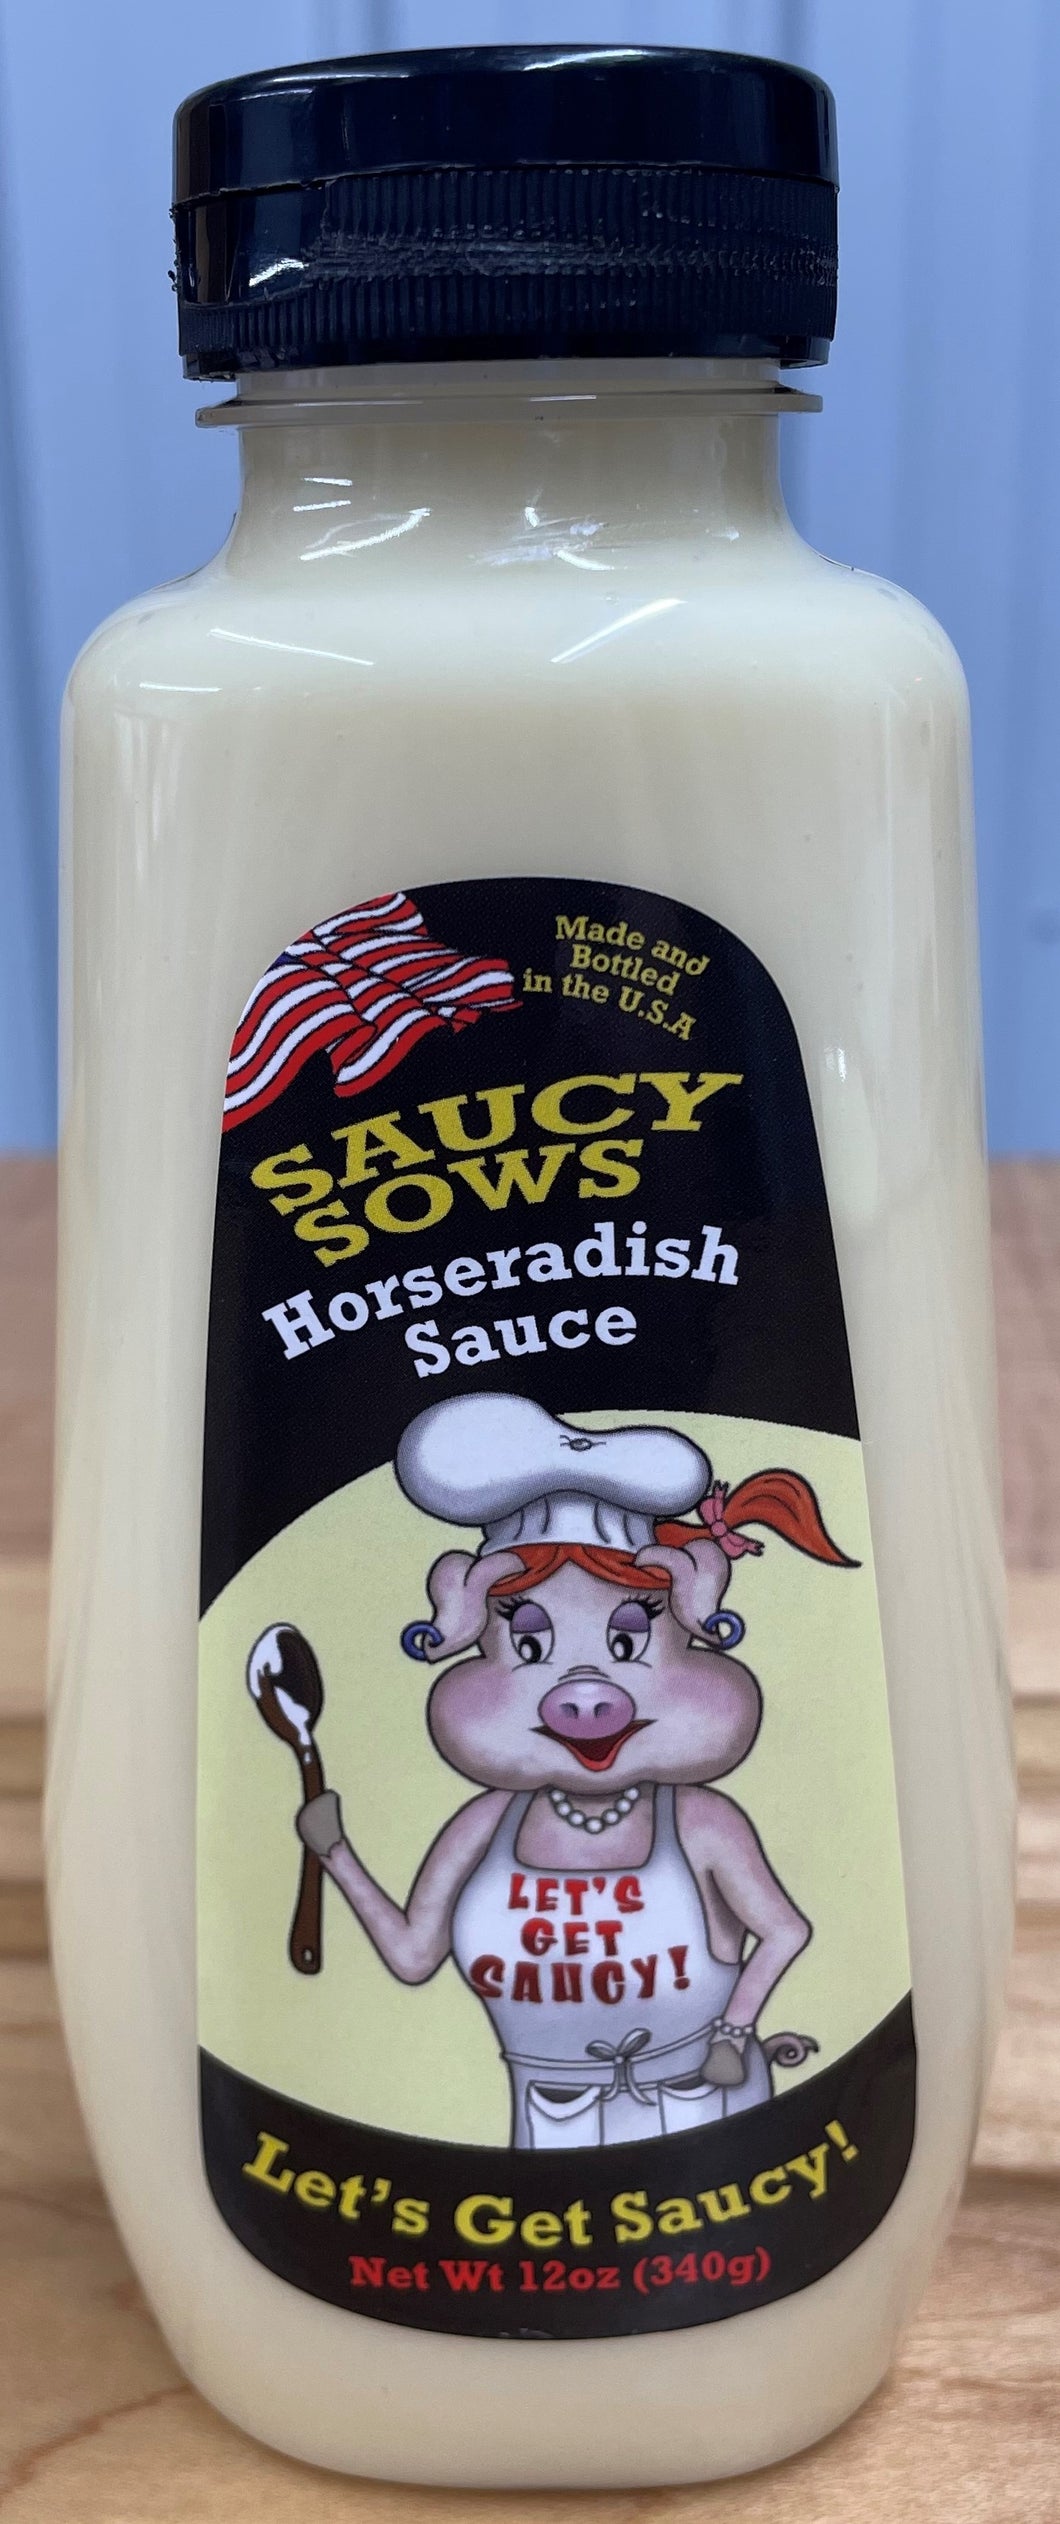 Saucy Sows Horseradish Sauce